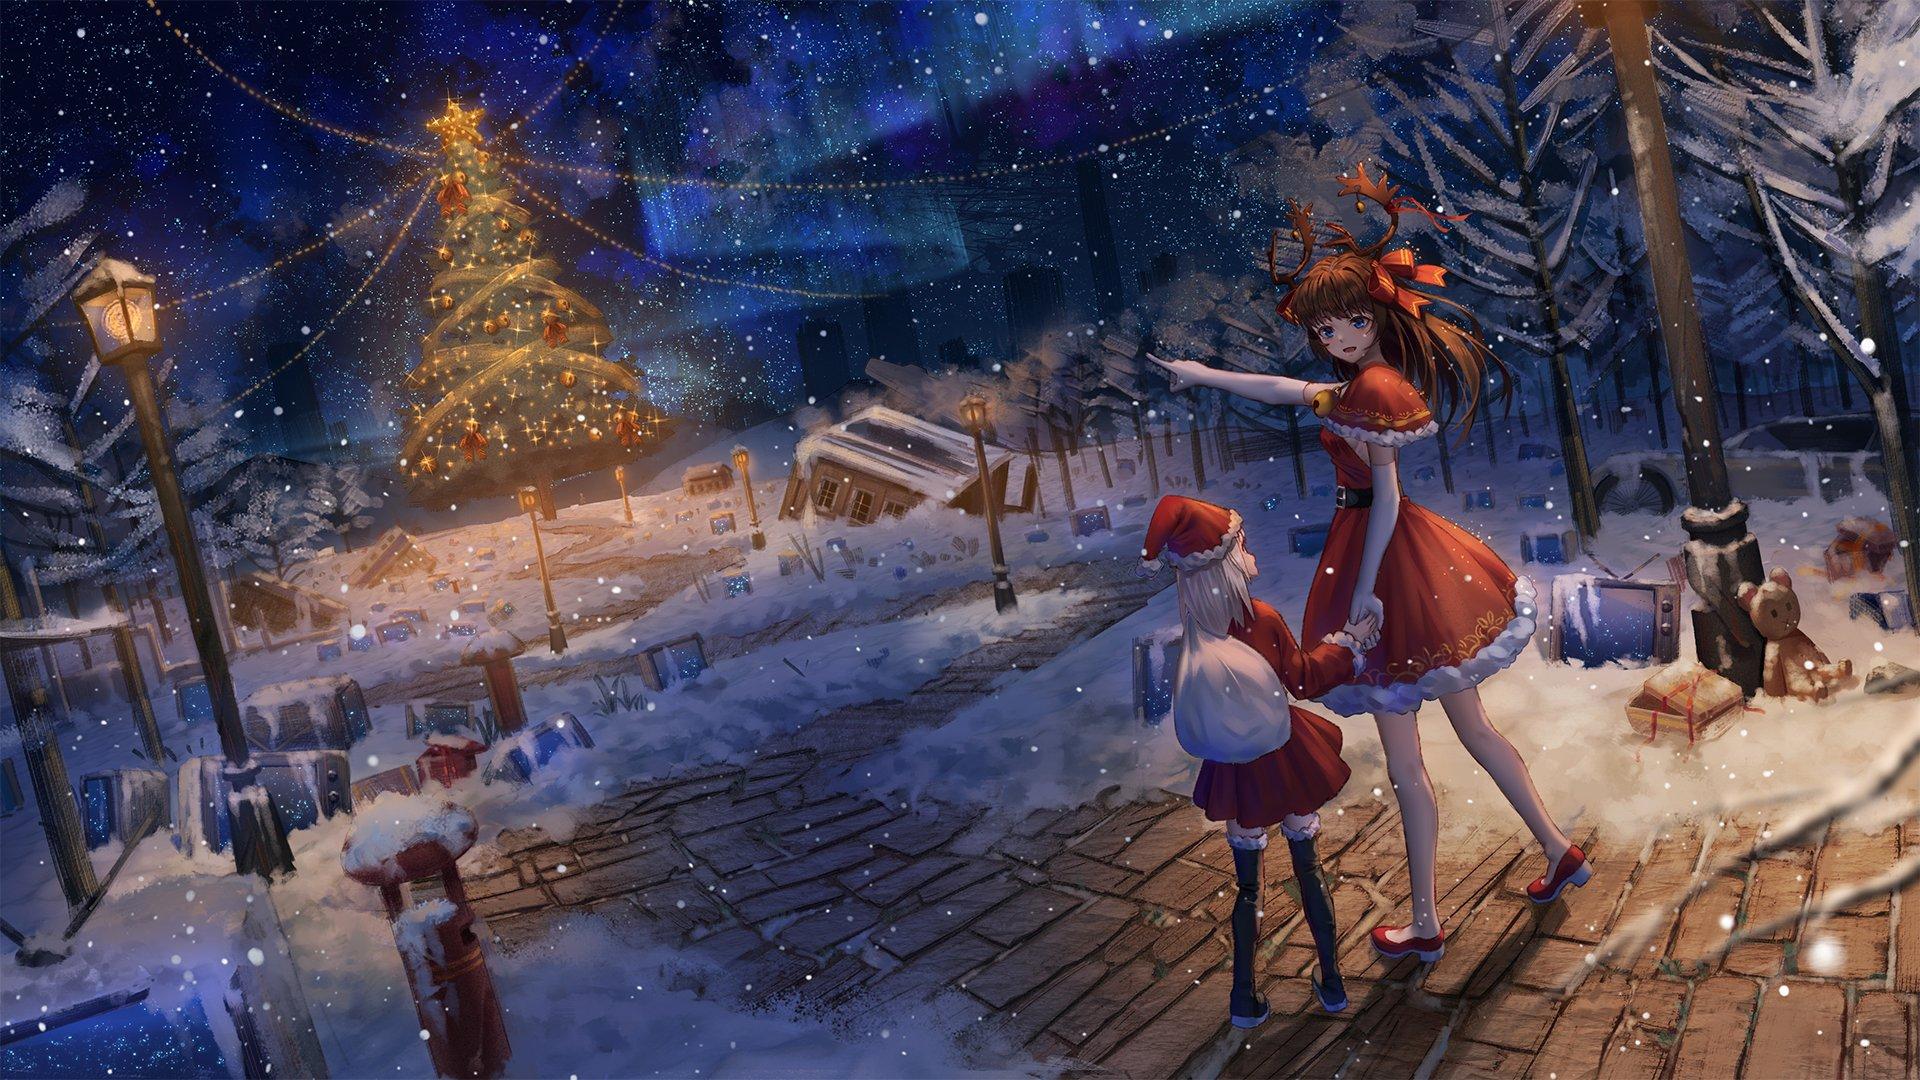 Christmas HD Wallpaper